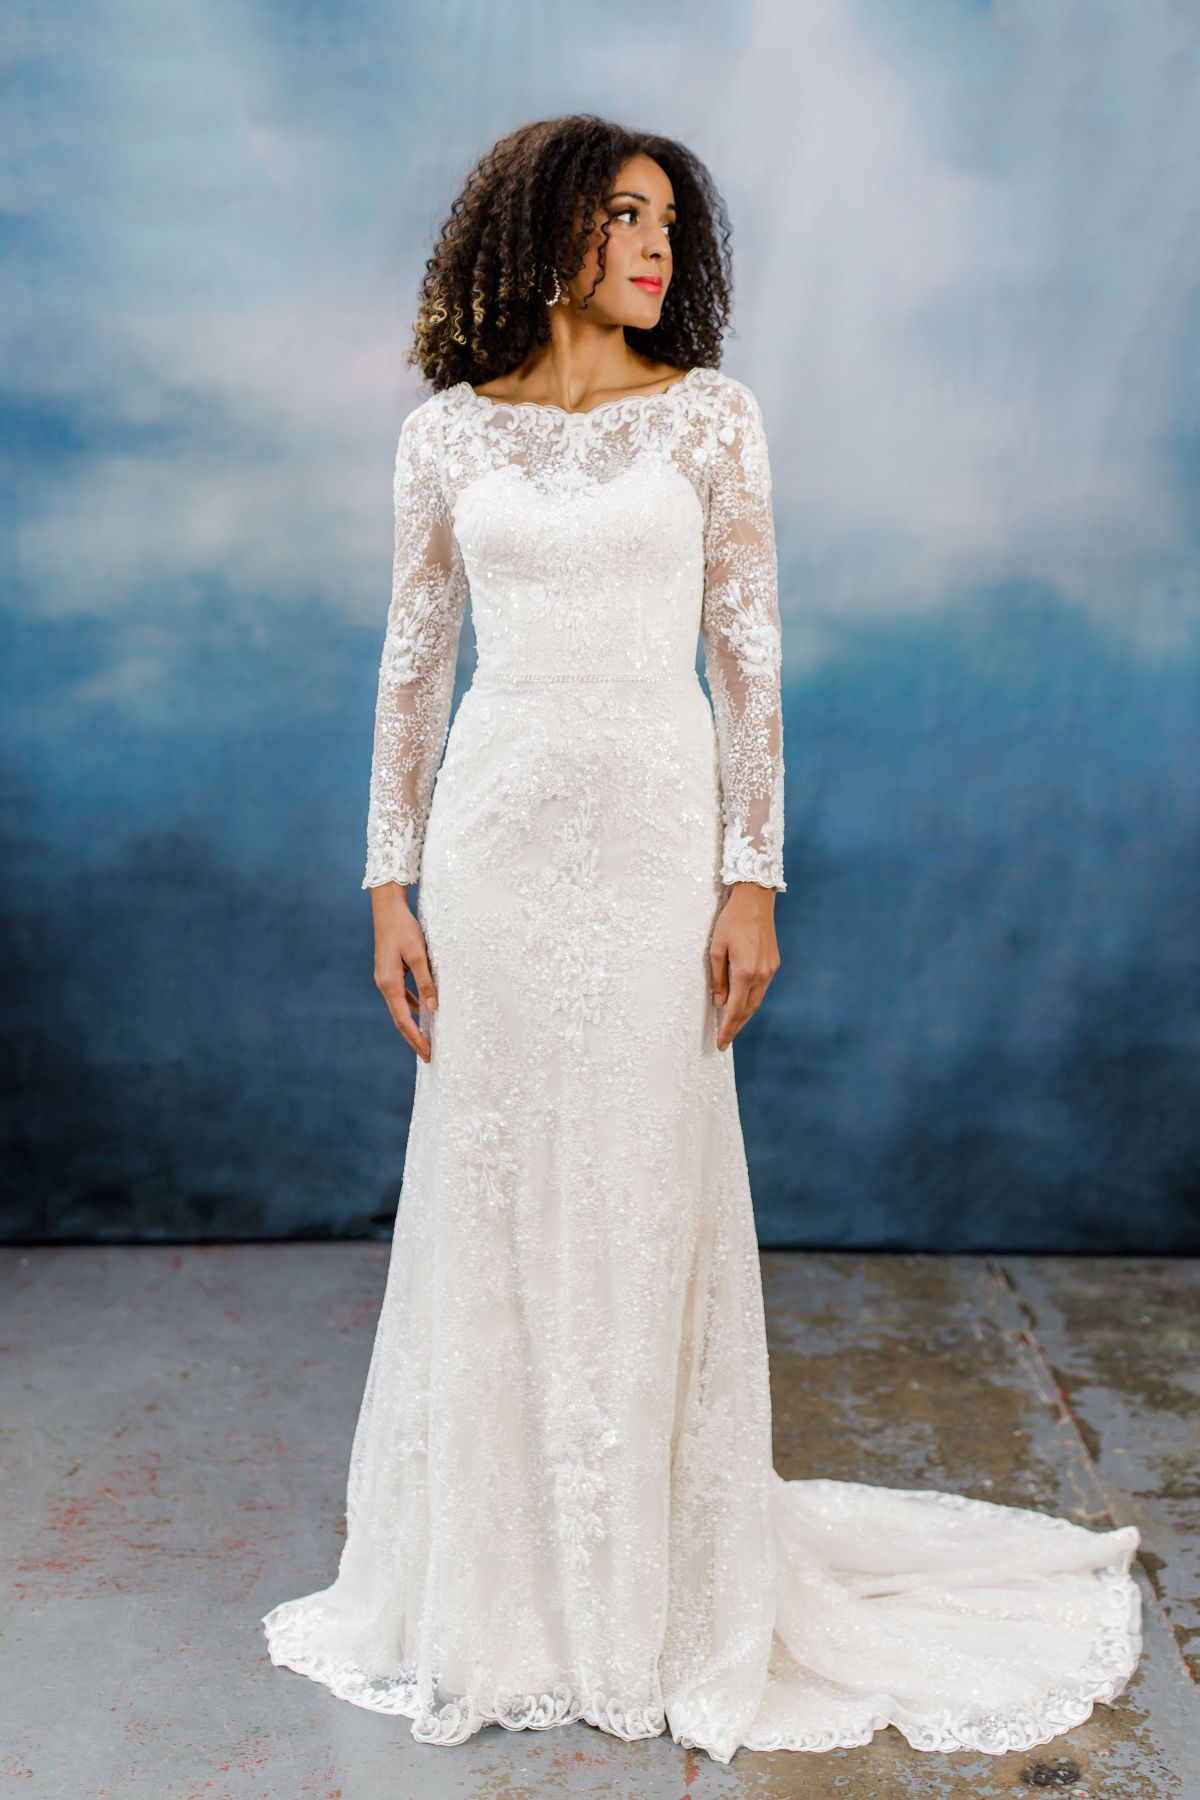 Best Dress 2 Impress Bridal-Image-2